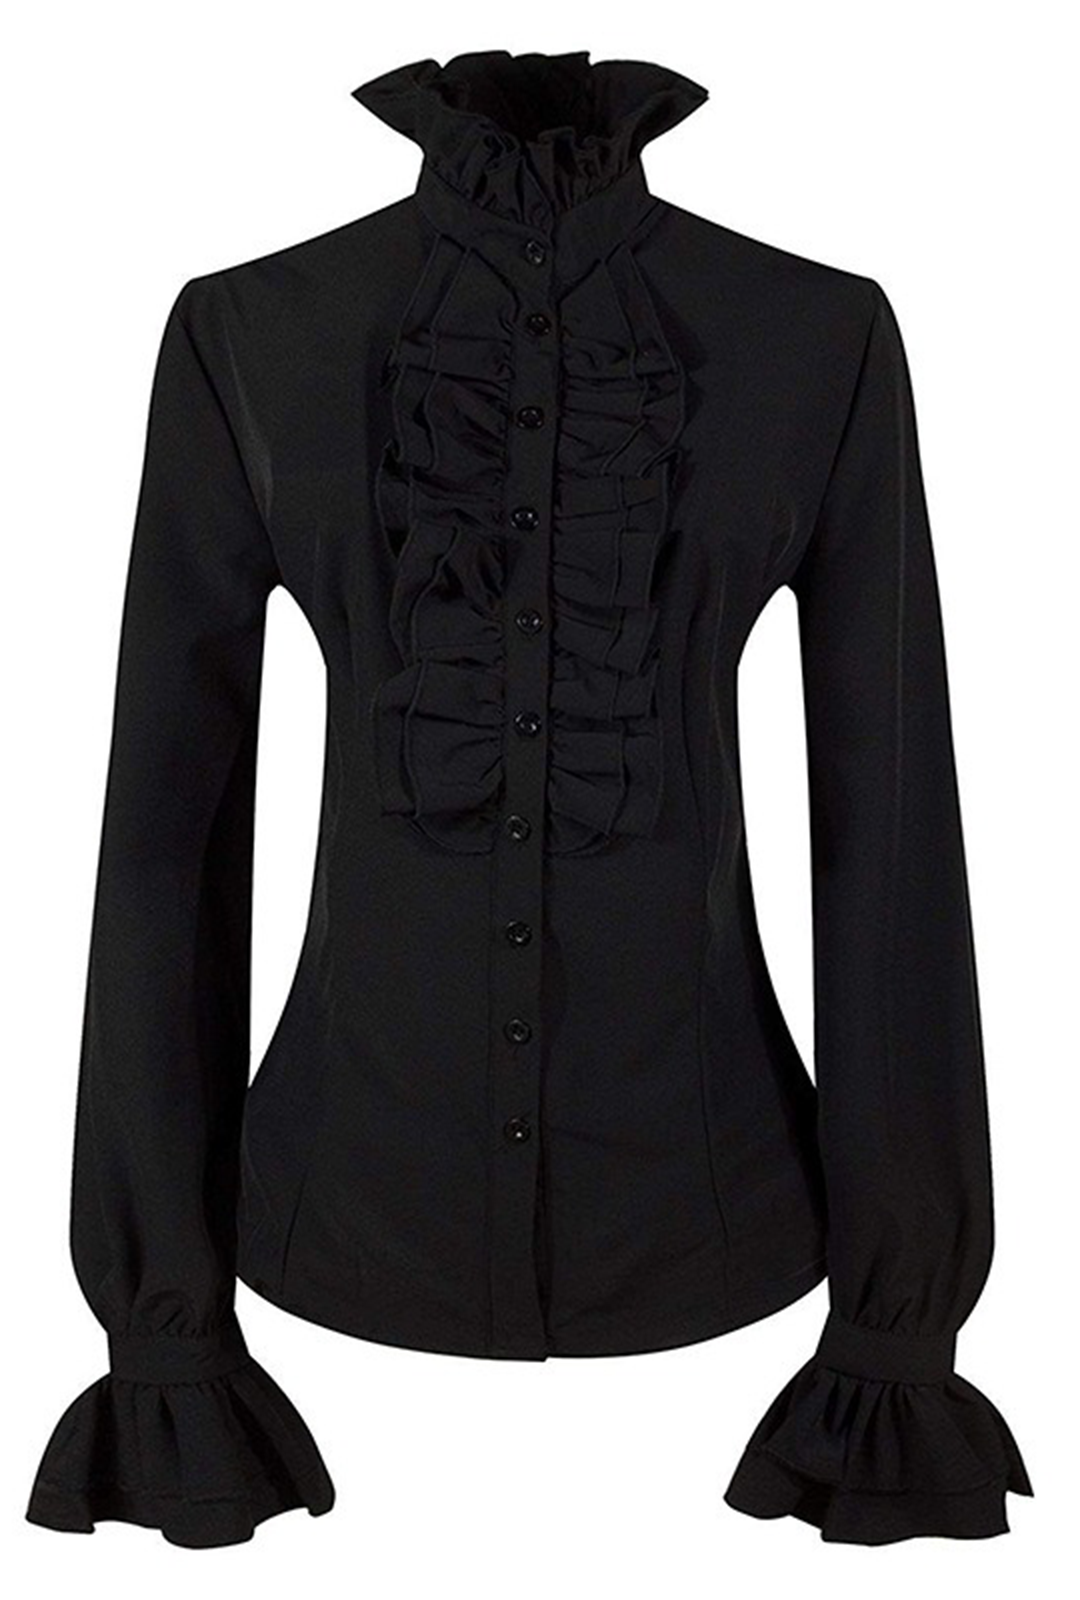 Black Victorian Ruffle Shirt